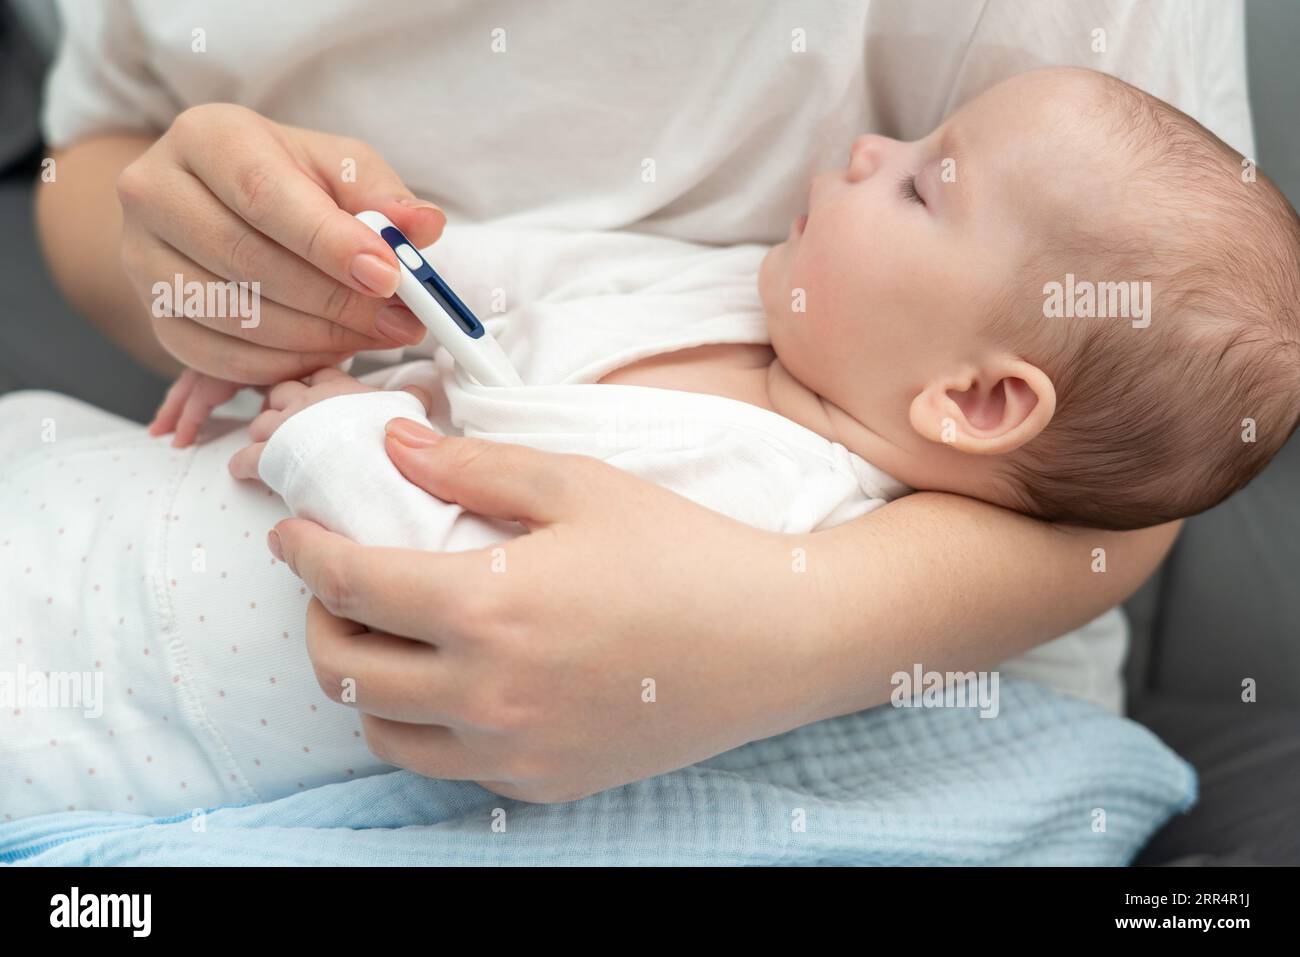 Slumbering infant undergoes temperature check, Concept of vigilant maternal care Stock Photo